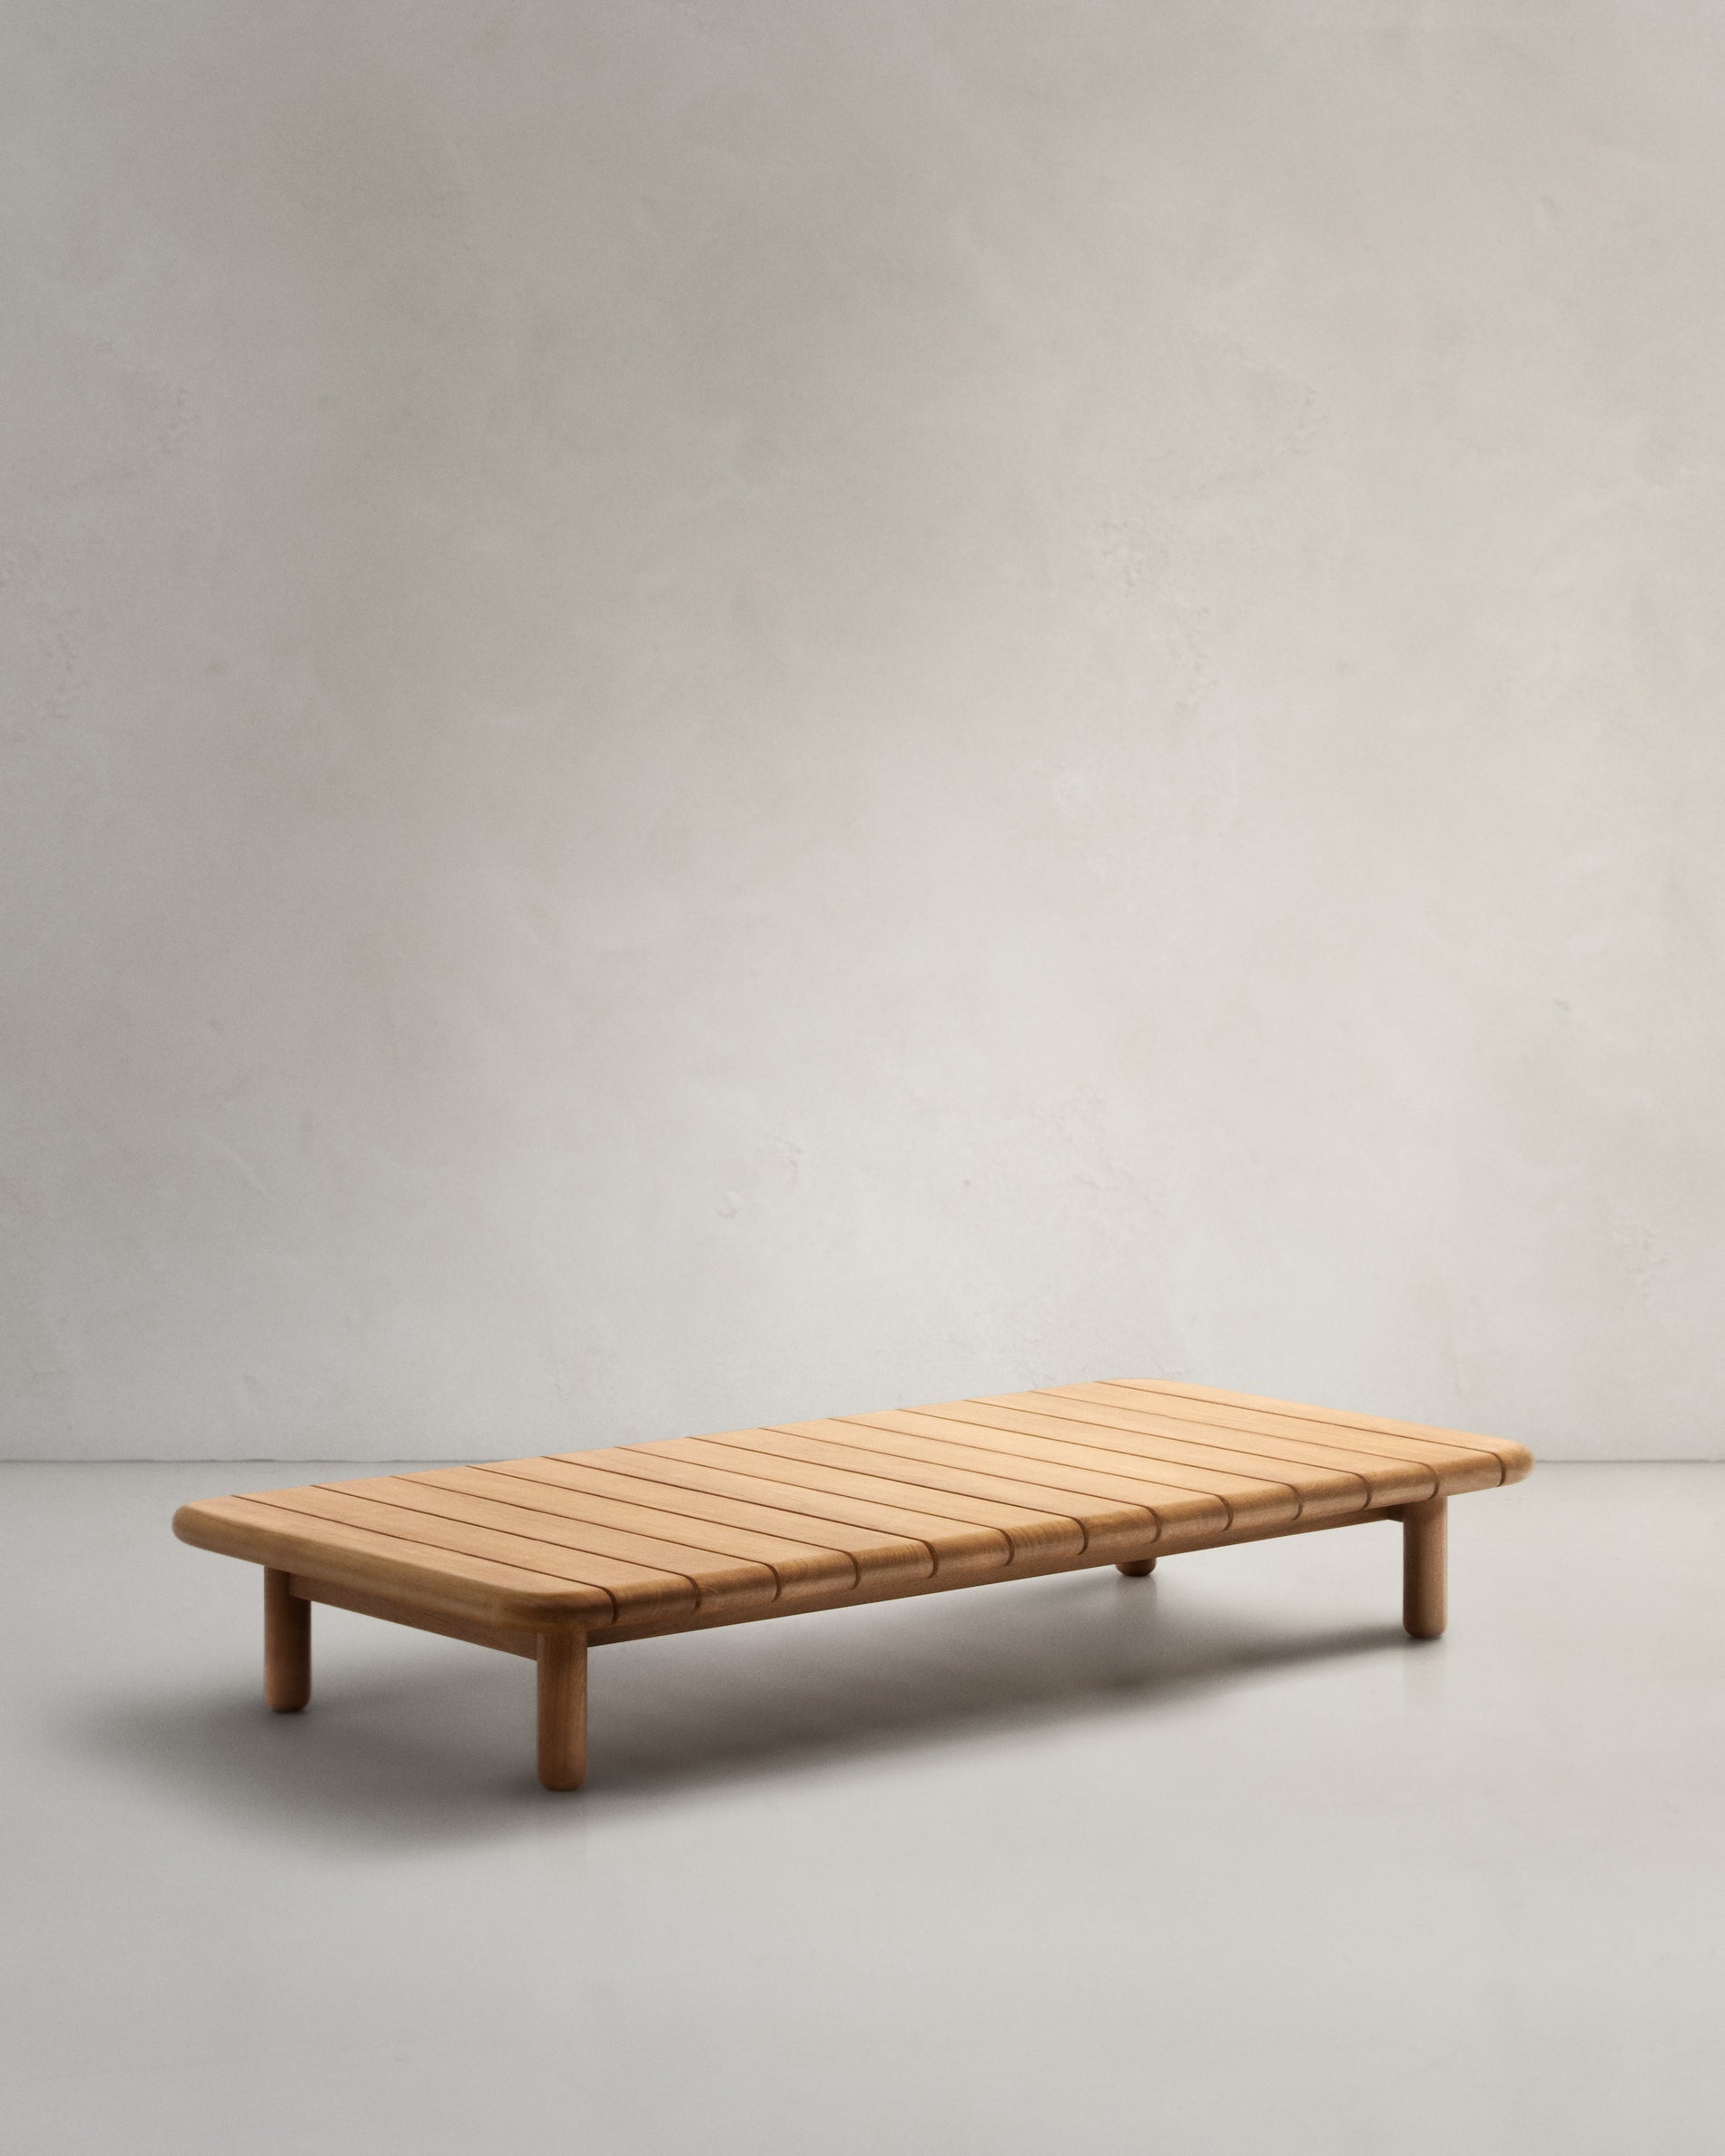 Turqueta coffee table in solid teak, 140 x 70 cm, 100% FSC